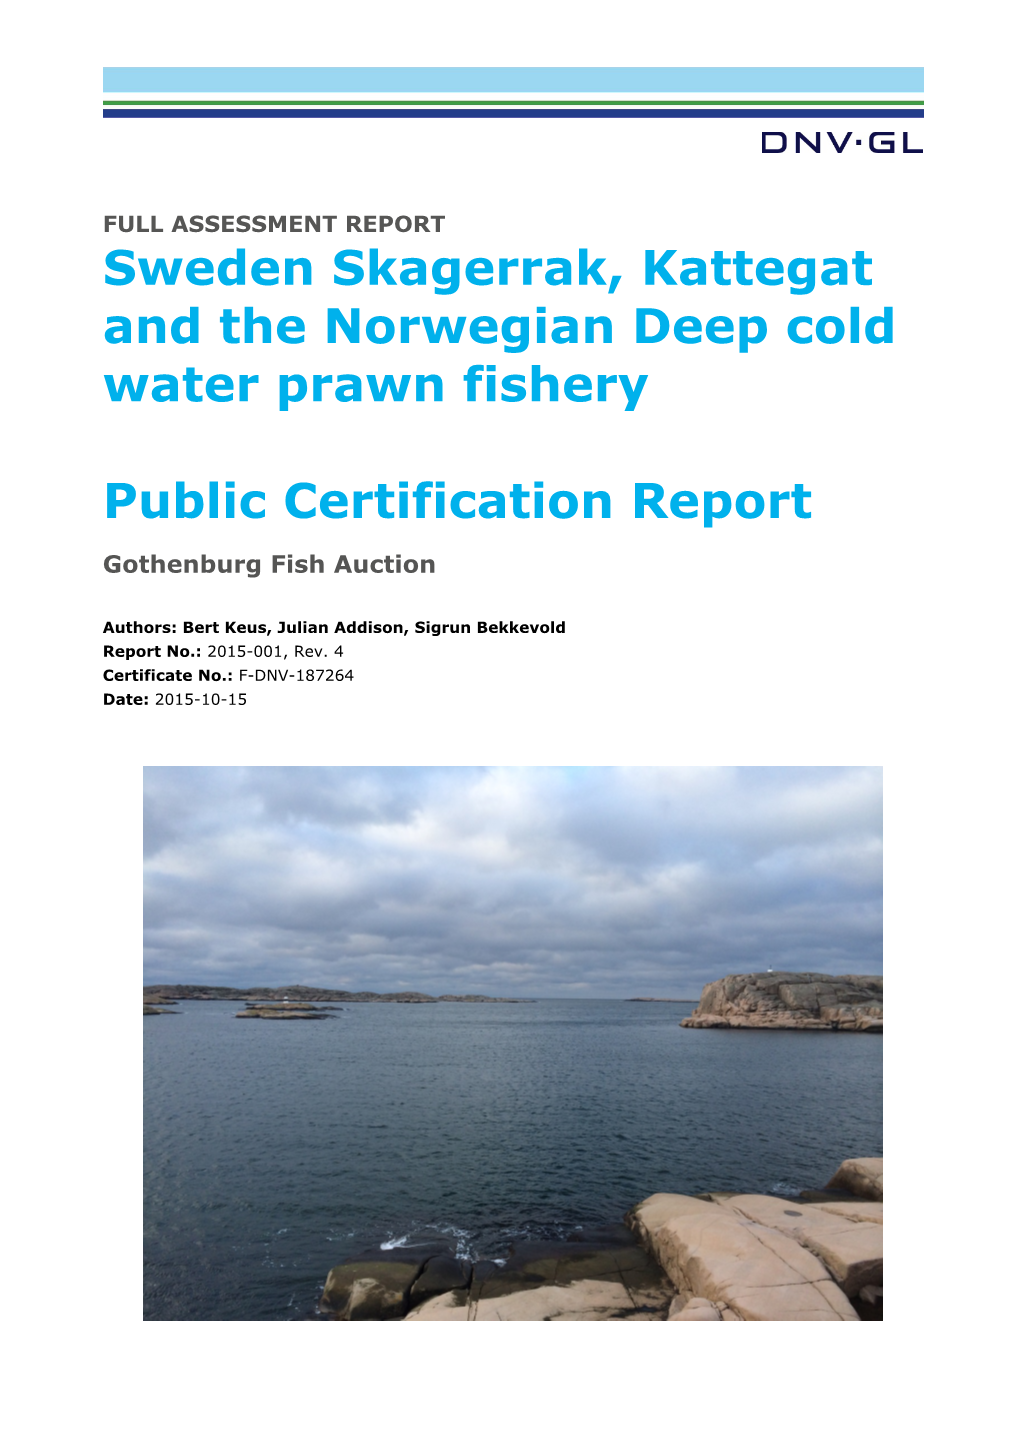 Sweden Skagerrak, Kattegat and the Norwegian Deep Cold Water Prawn Fishery